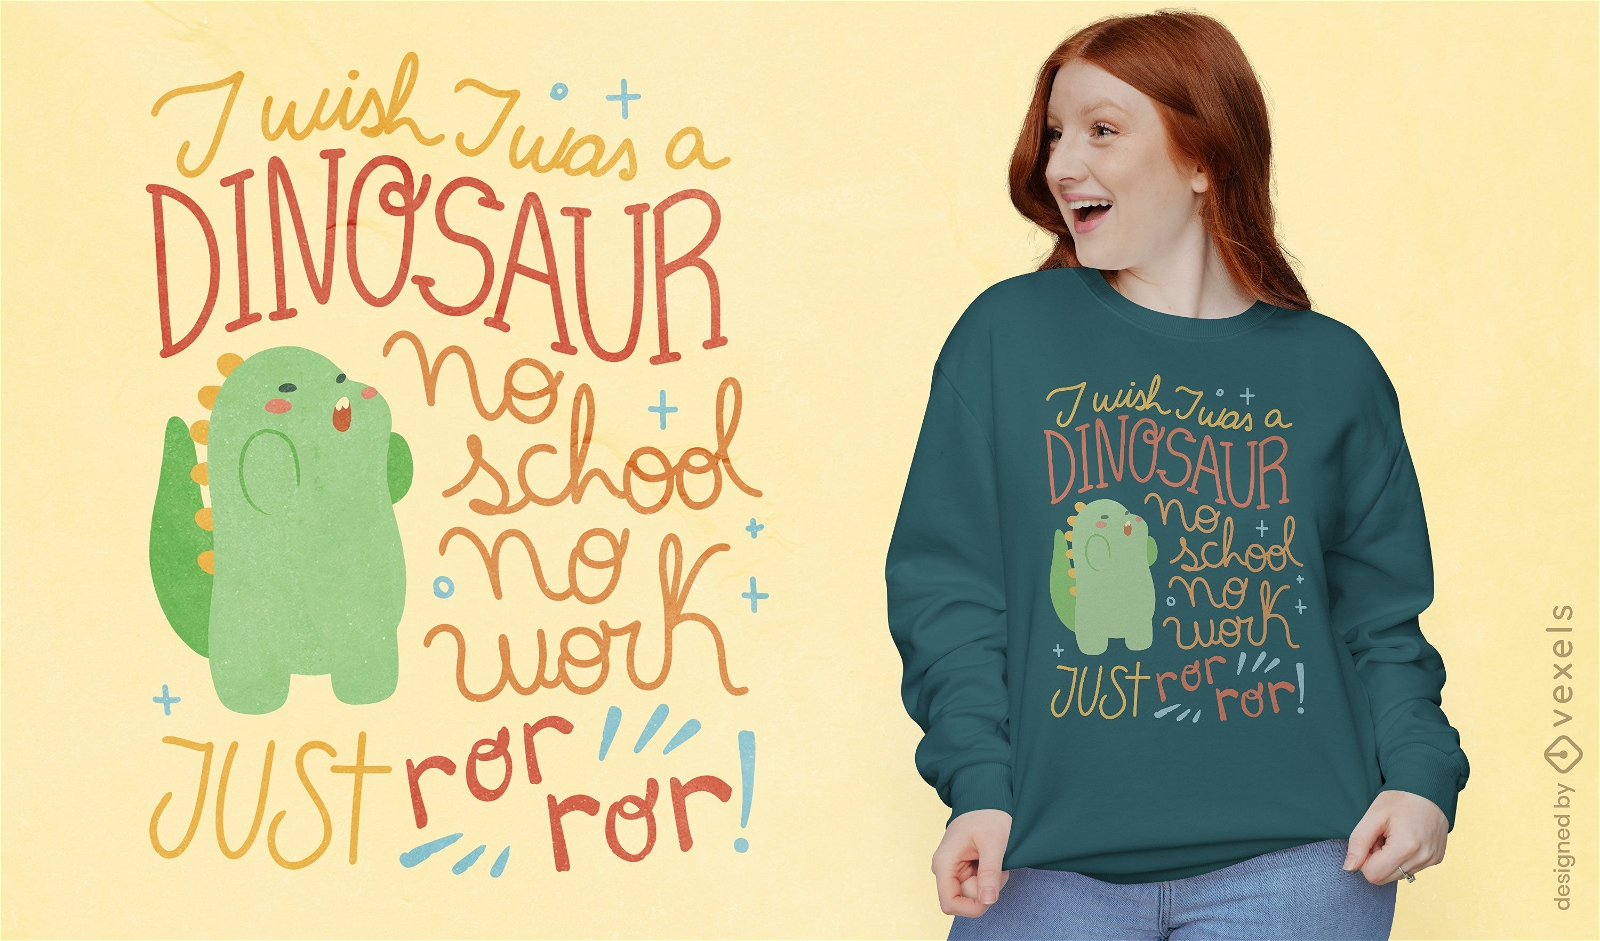 Dinosaur funny quote t-shirt design